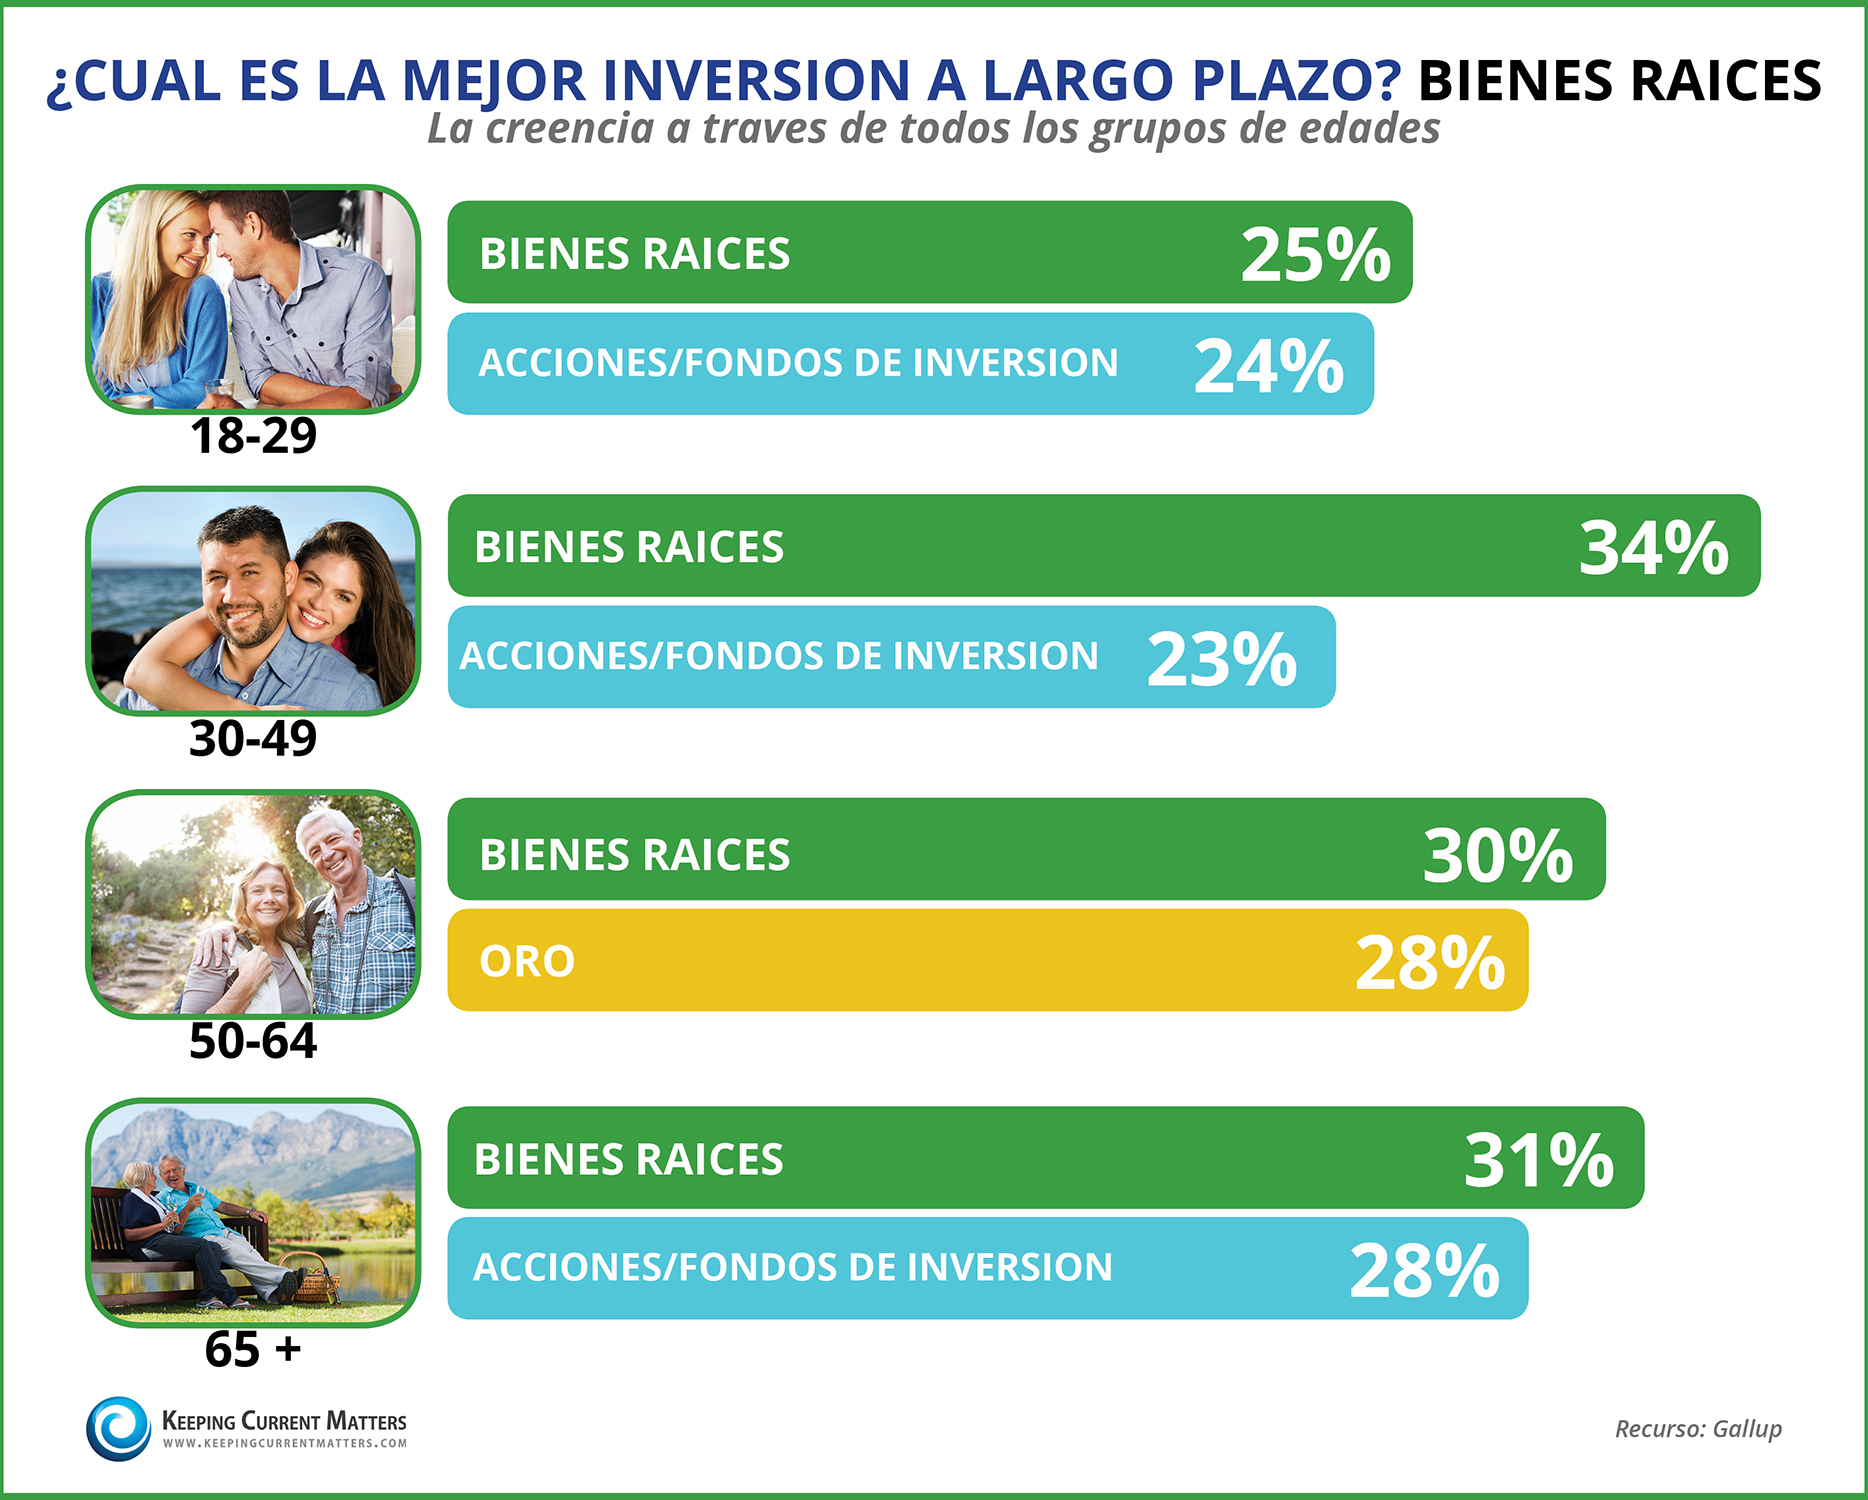 Bienes Raices: La Mejor Inversion a Largo Plazo | Keeping Current Matters